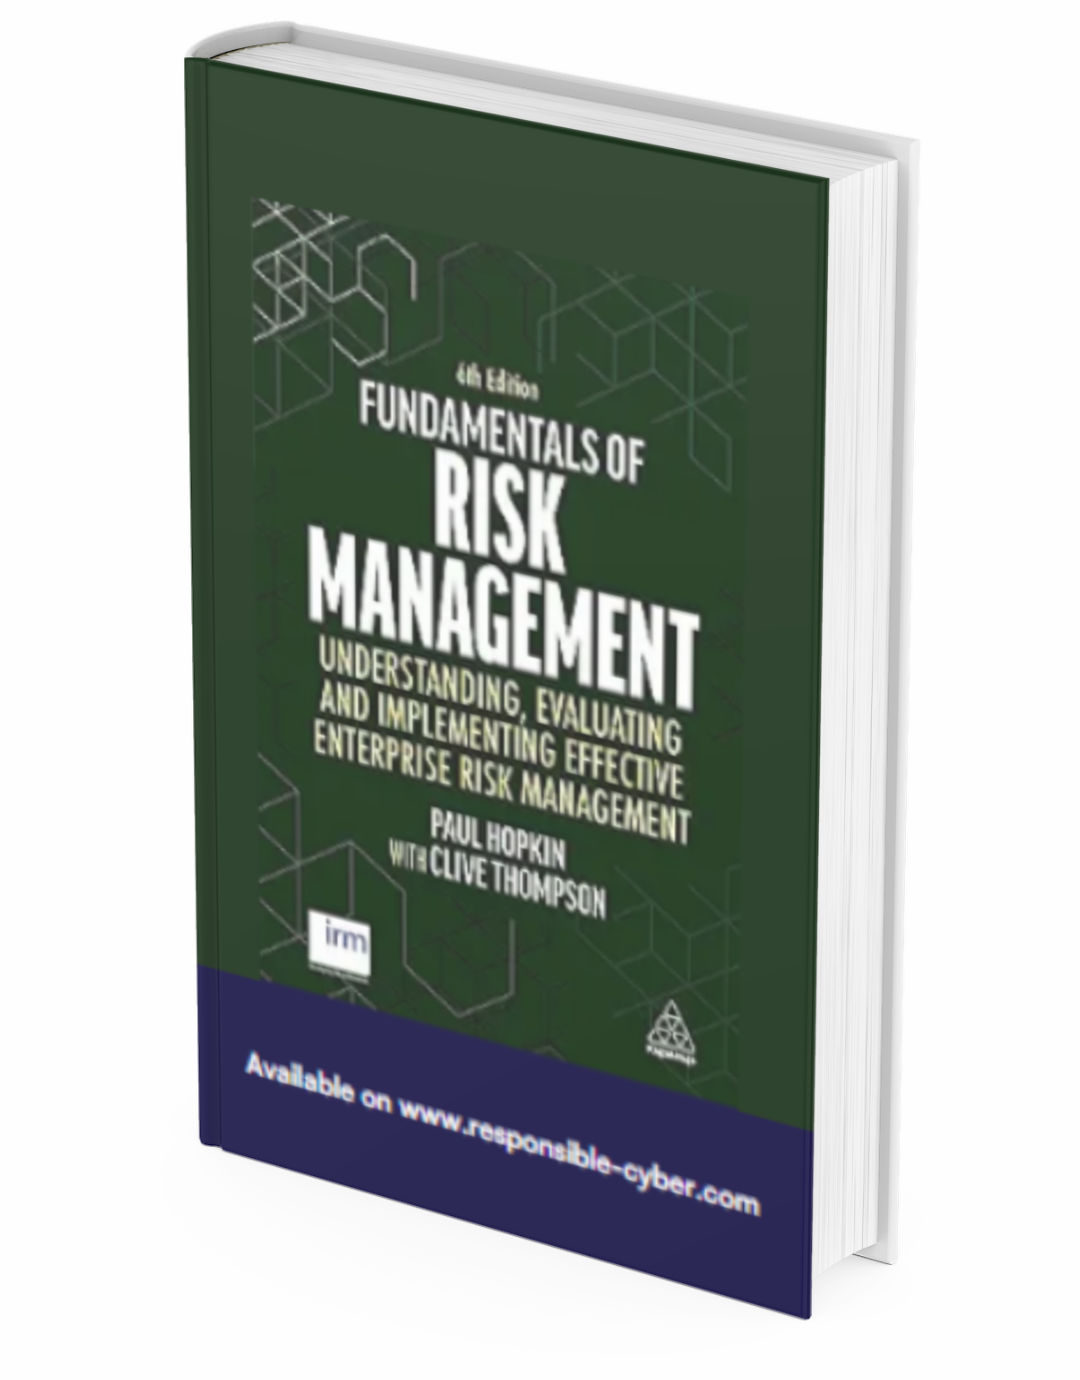 Fundamentals of Risk Management: Understanding, Evaluating and Implementing Effective Enterprise Risk Management 6th Edition